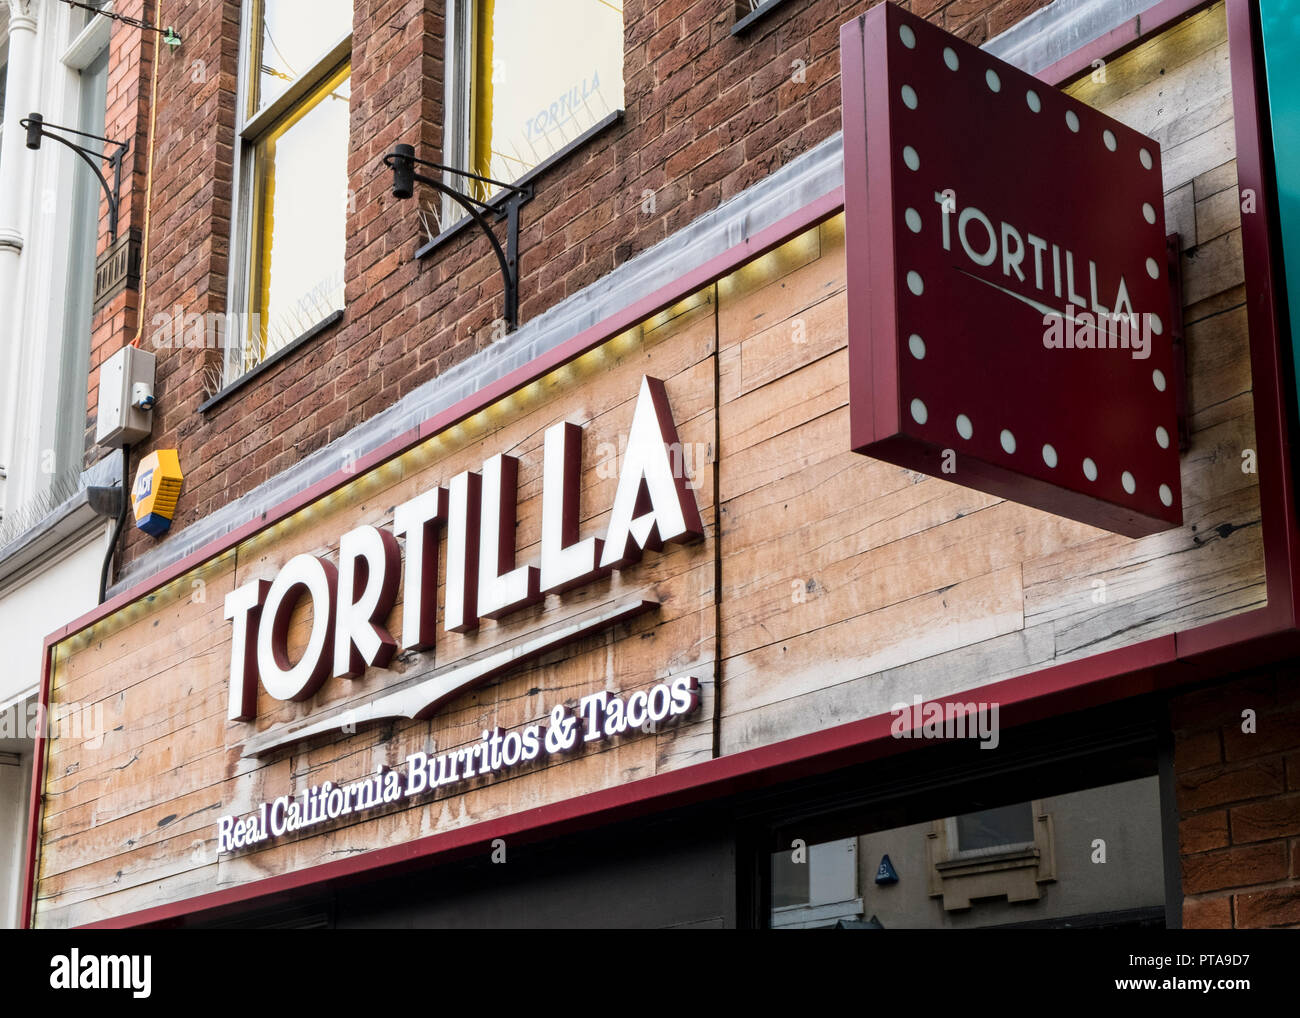 Restaurante de tortillas, Nottingham, Inglaterra, Reino Unido. Foto de stock